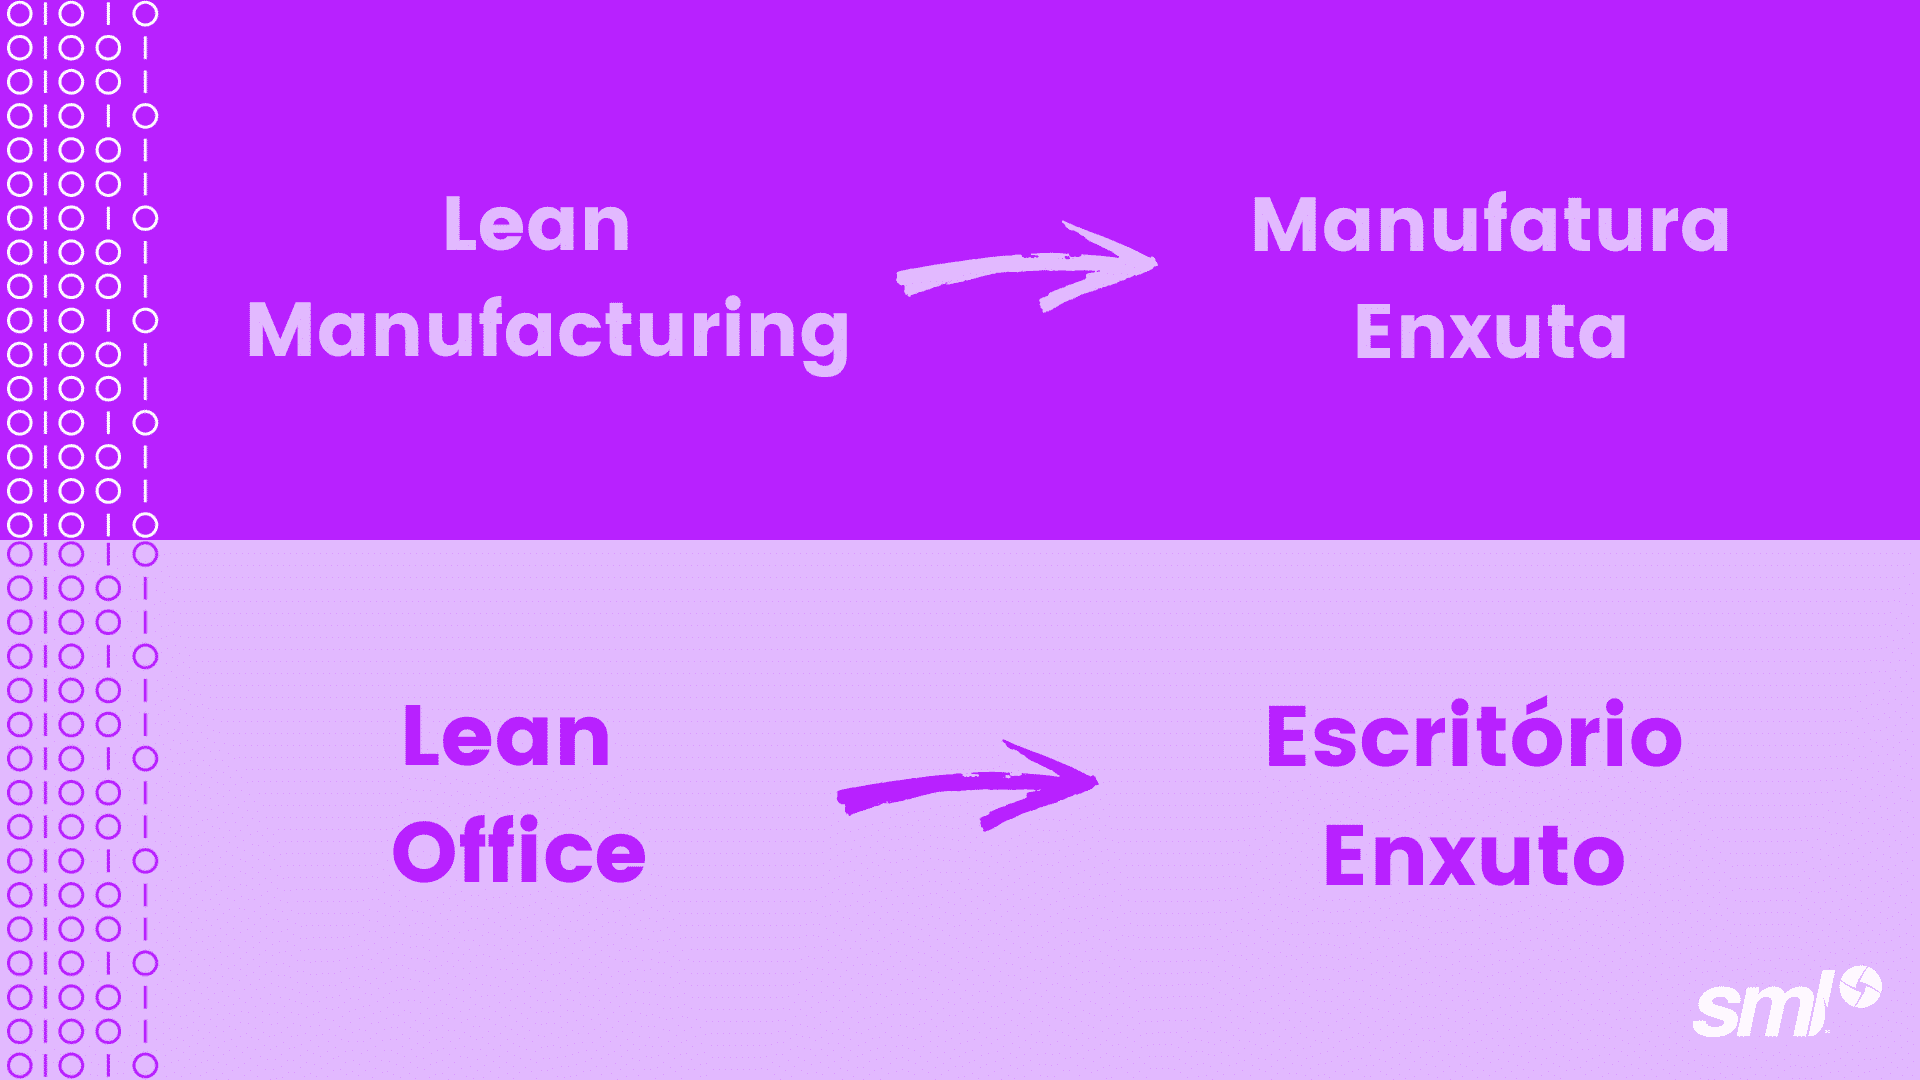 Leoffice x lean manufacturing